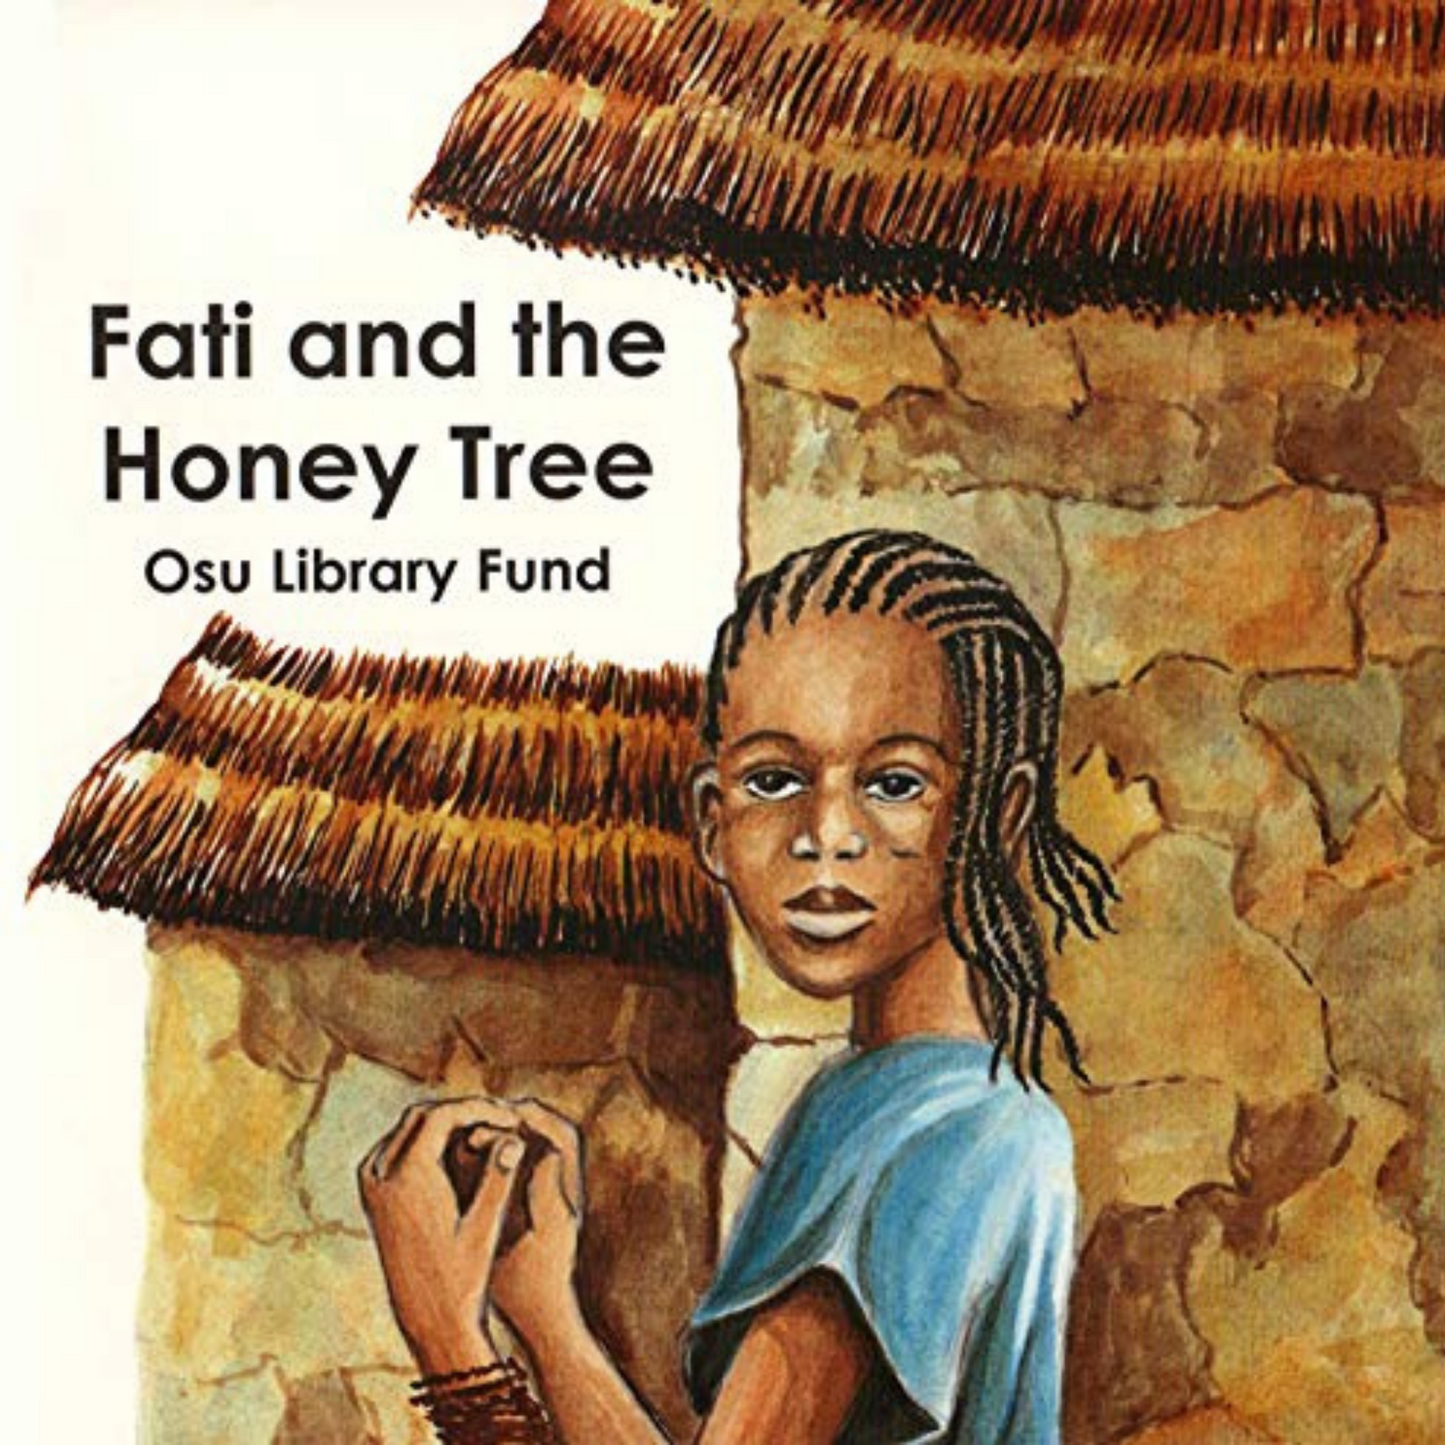 Fati and the Honey Tree